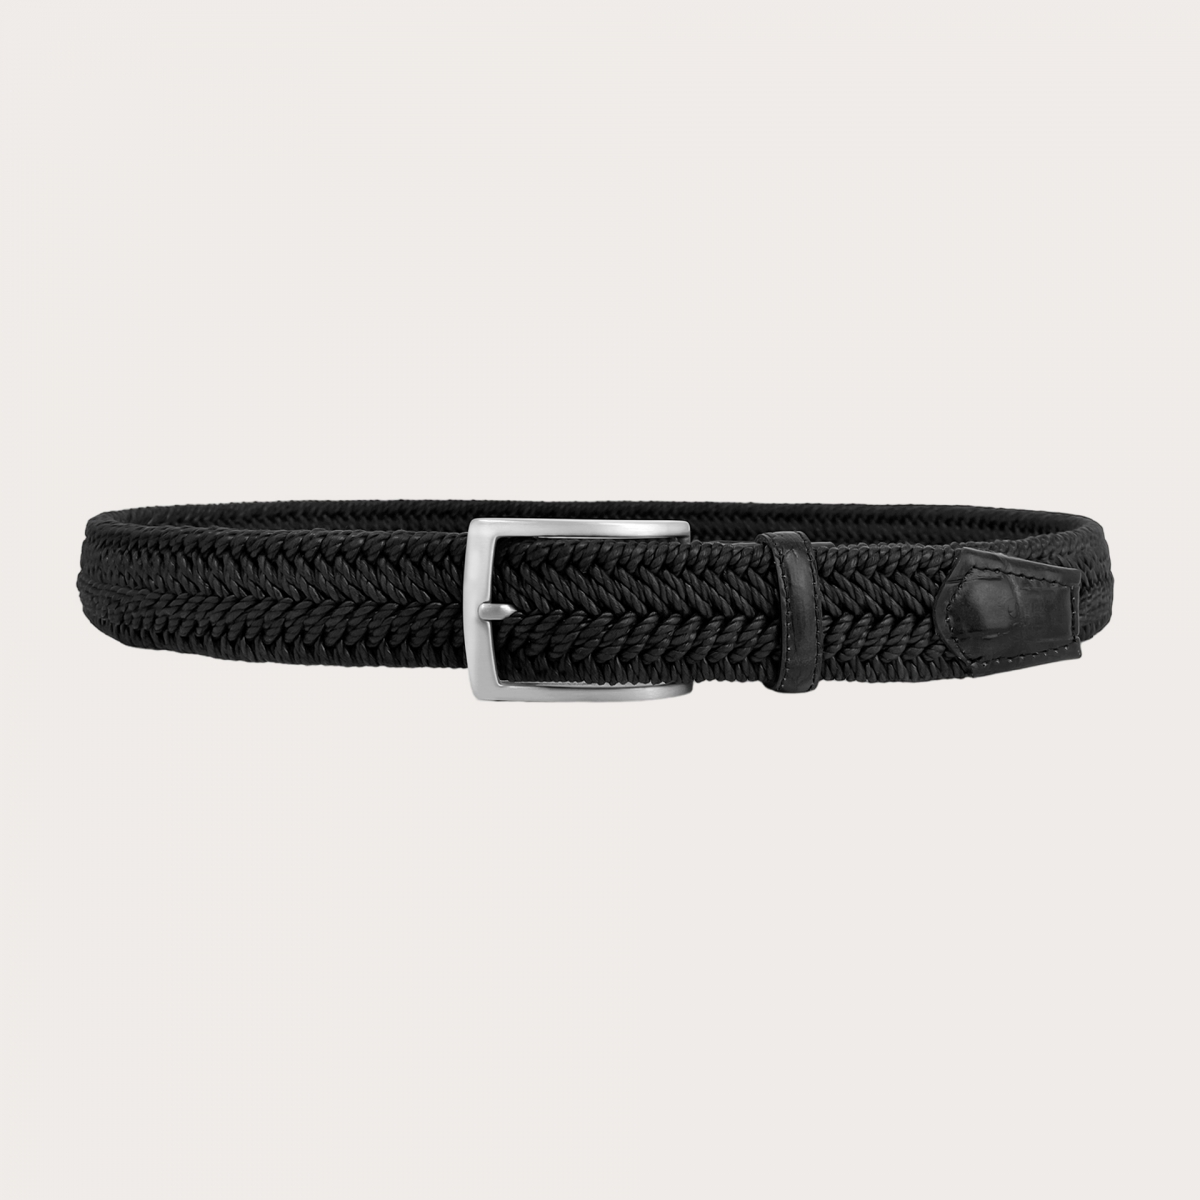 Black elastic braided belt adorned with genuine crocodile-stamped bovine leather parts